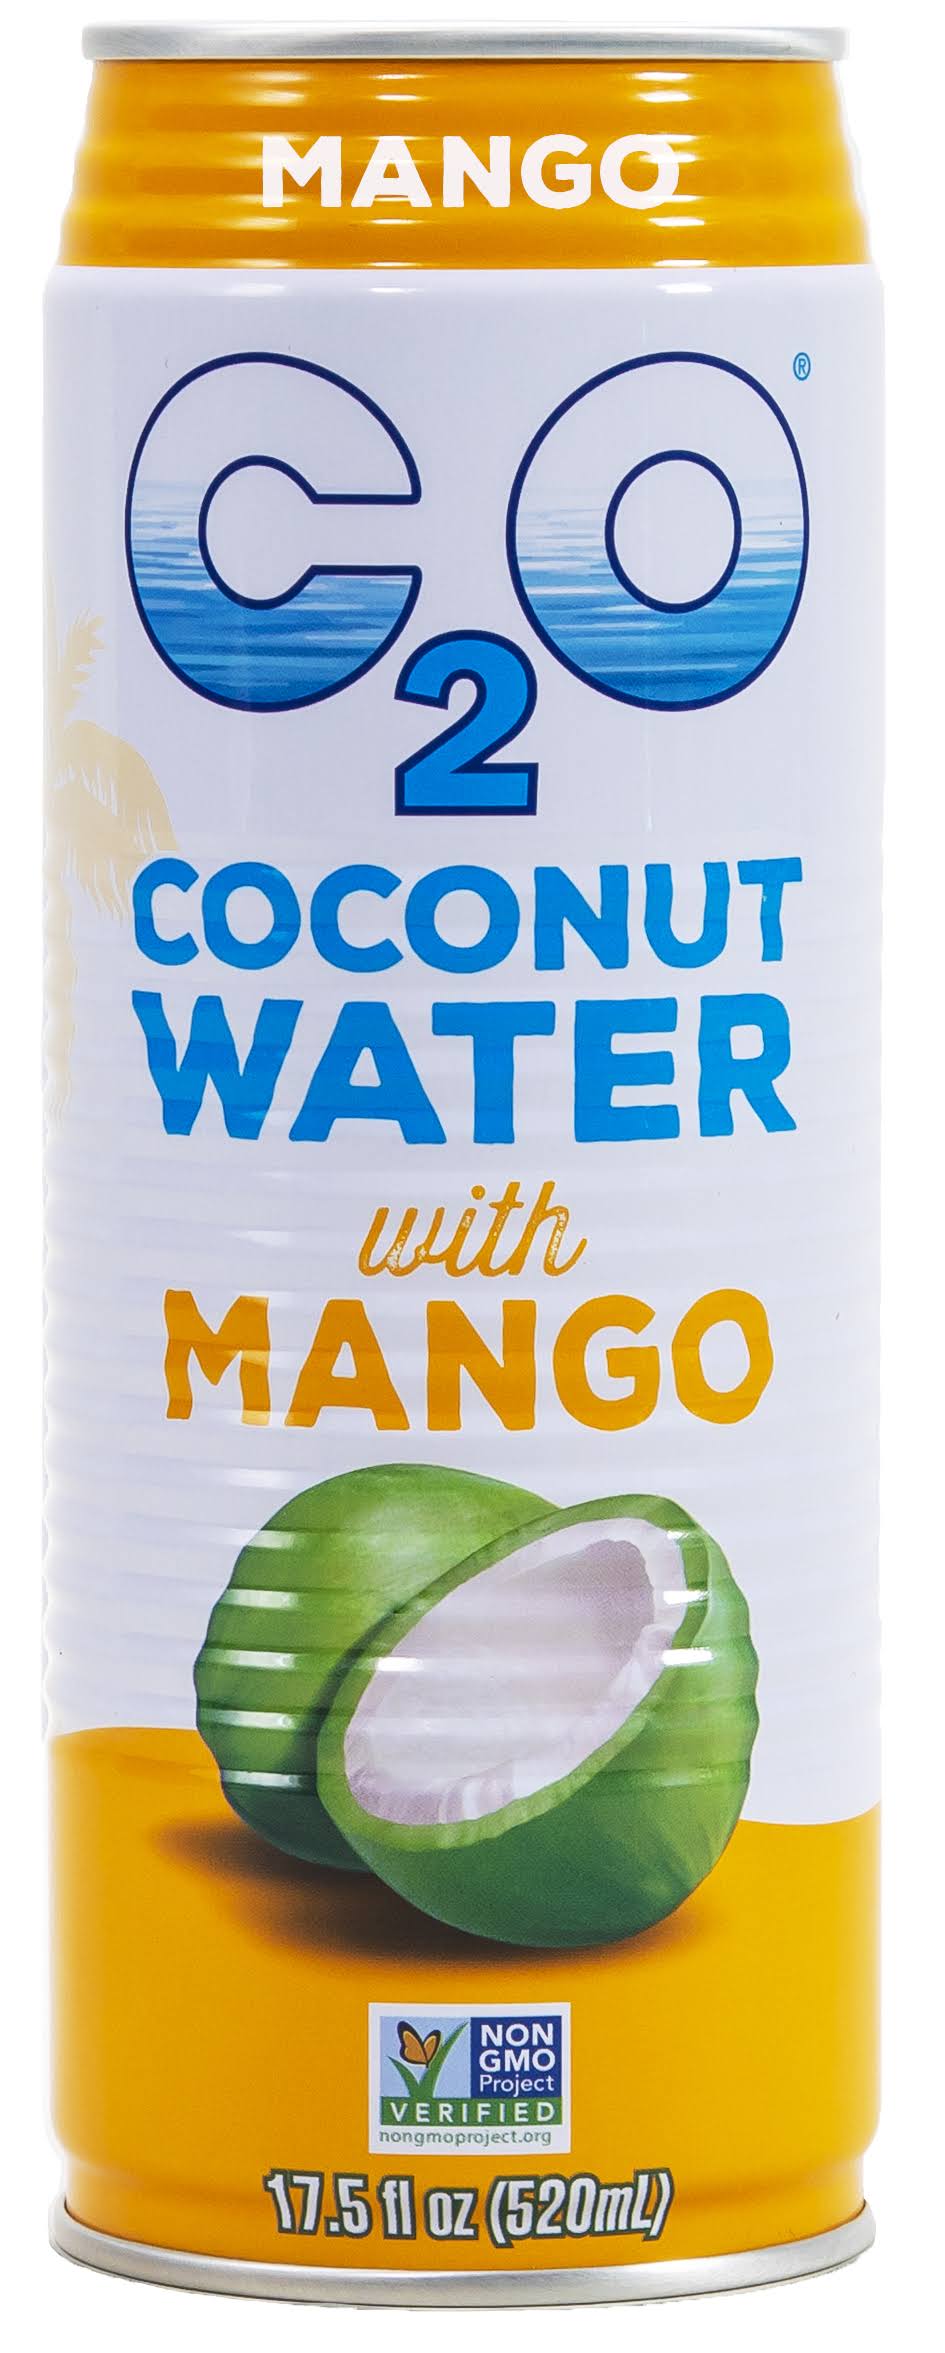 C2O - Pure Coconut Water - Mango - Case of 12 - 17.5 fl oz.